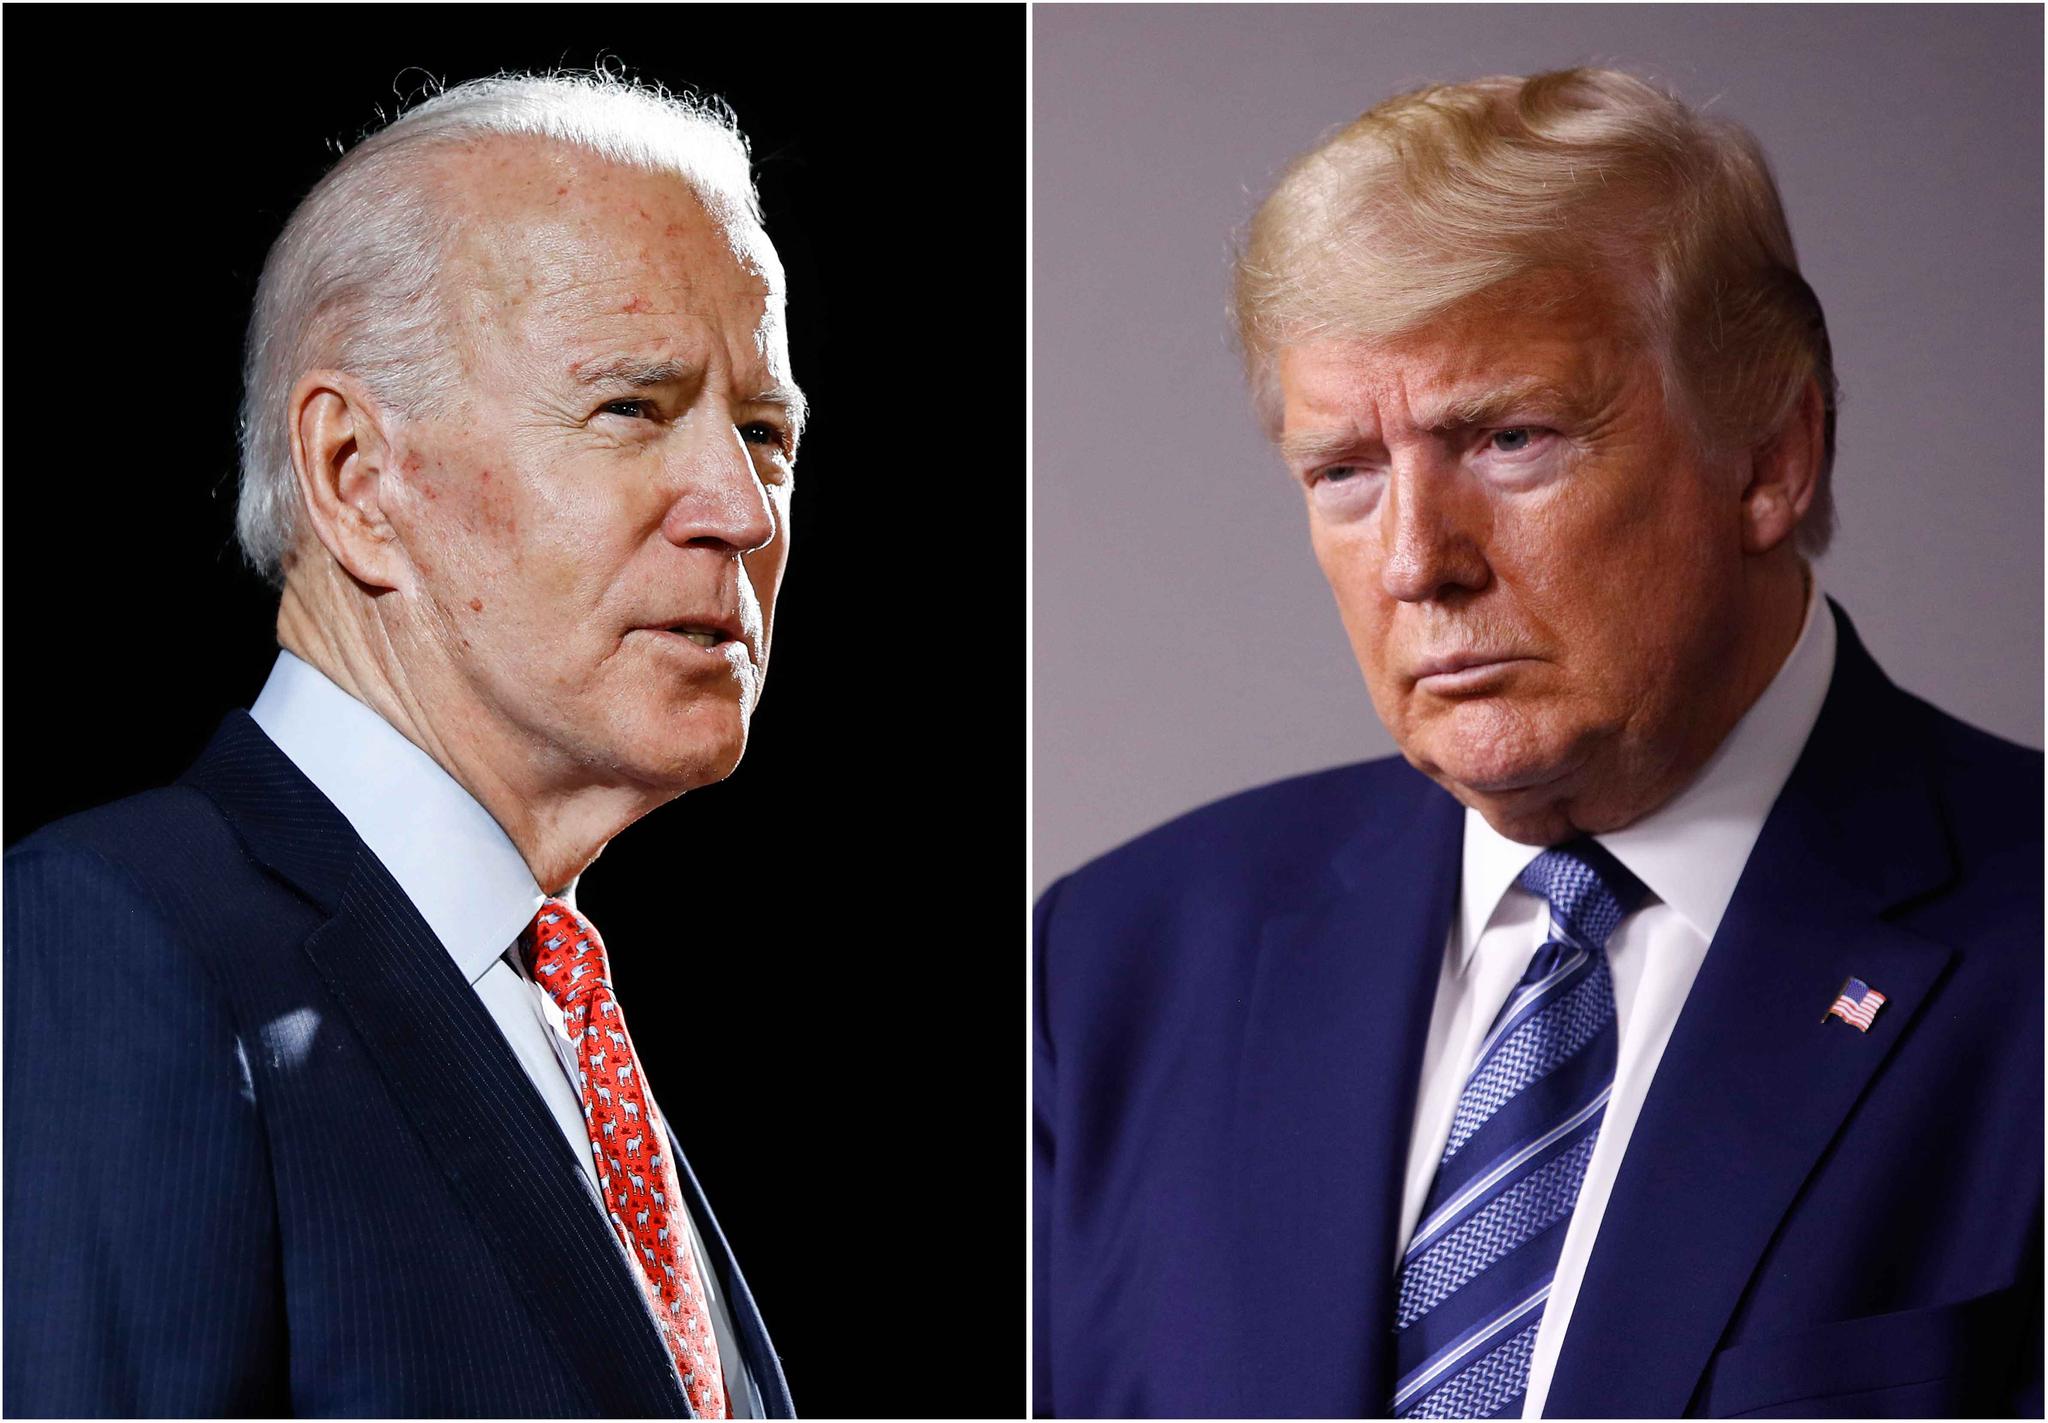 Former Vice President Joe Biden and President Donald Trump